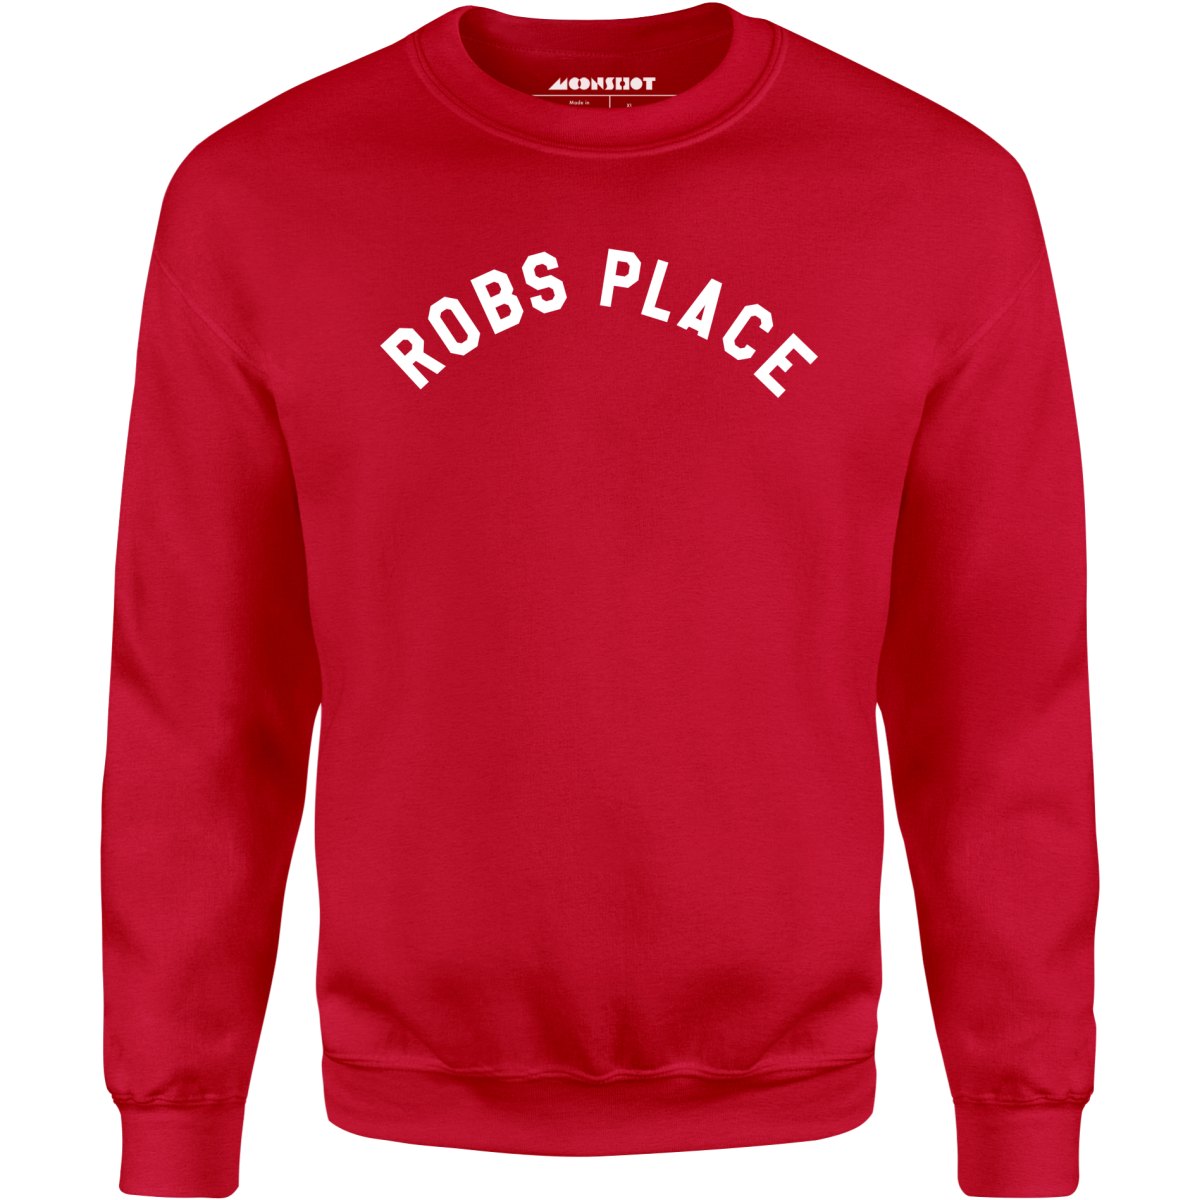 Rob's Place - Unisex Sweatshirt